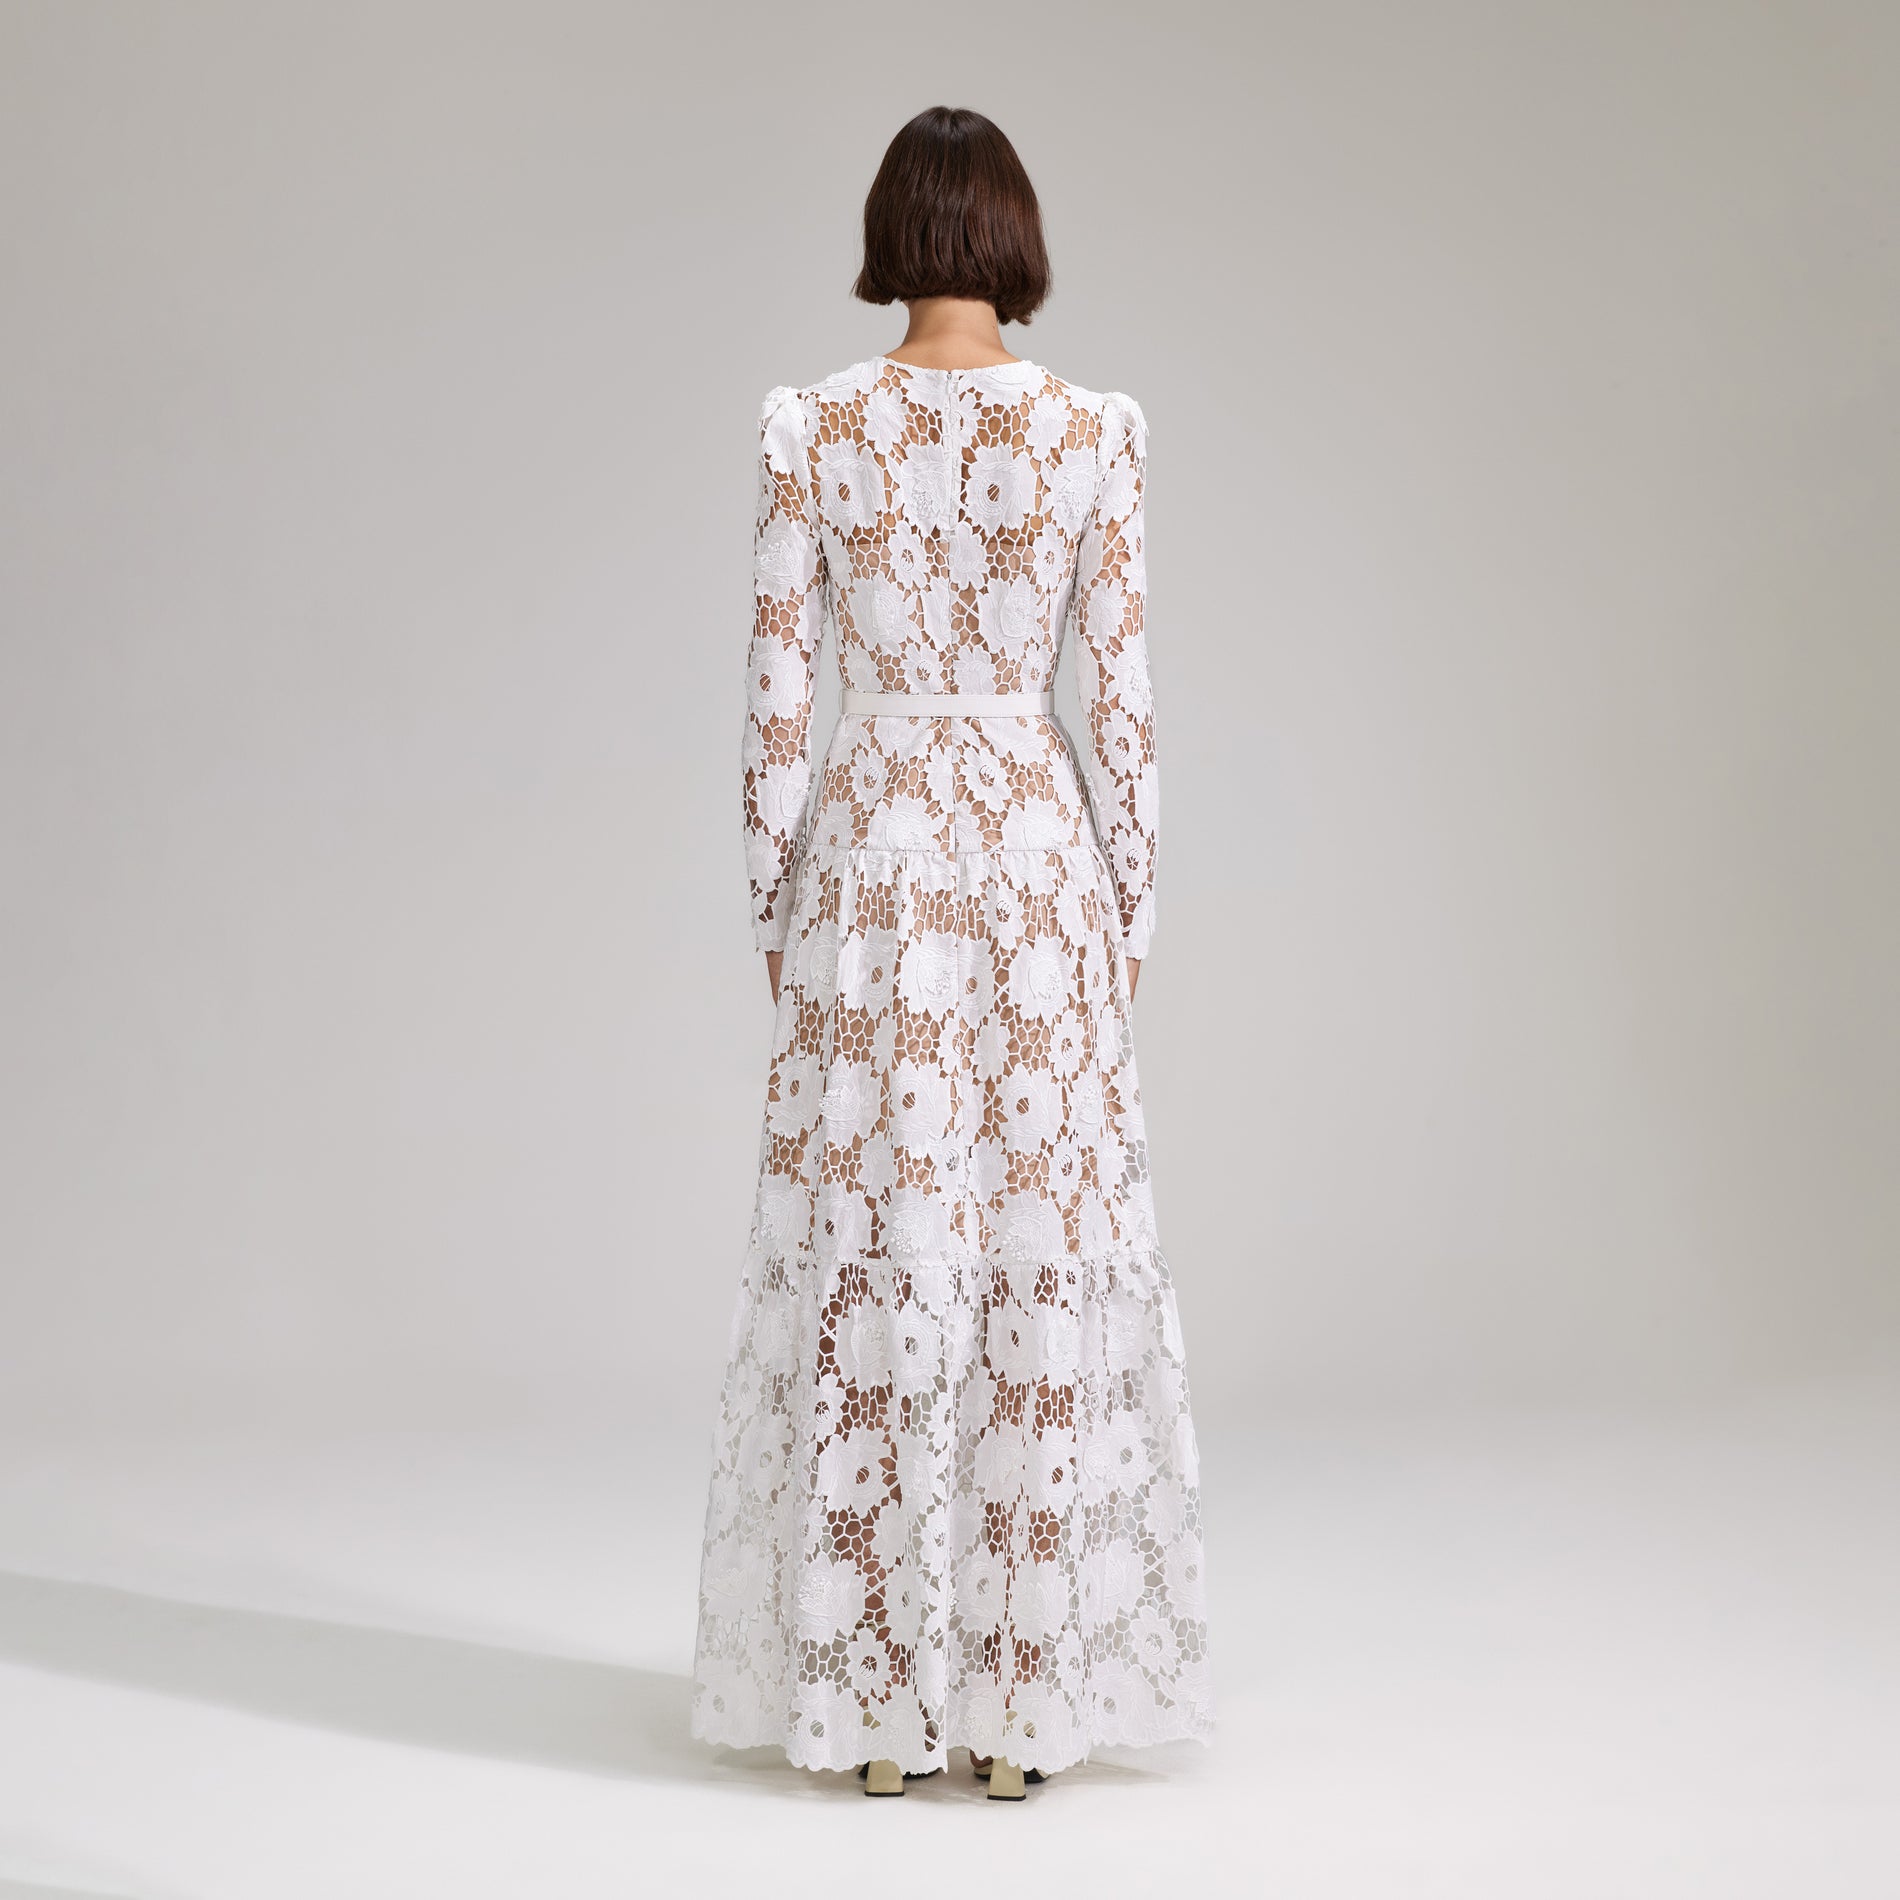 A woman wearing the White 3D Cotton Lace Maxi Dress